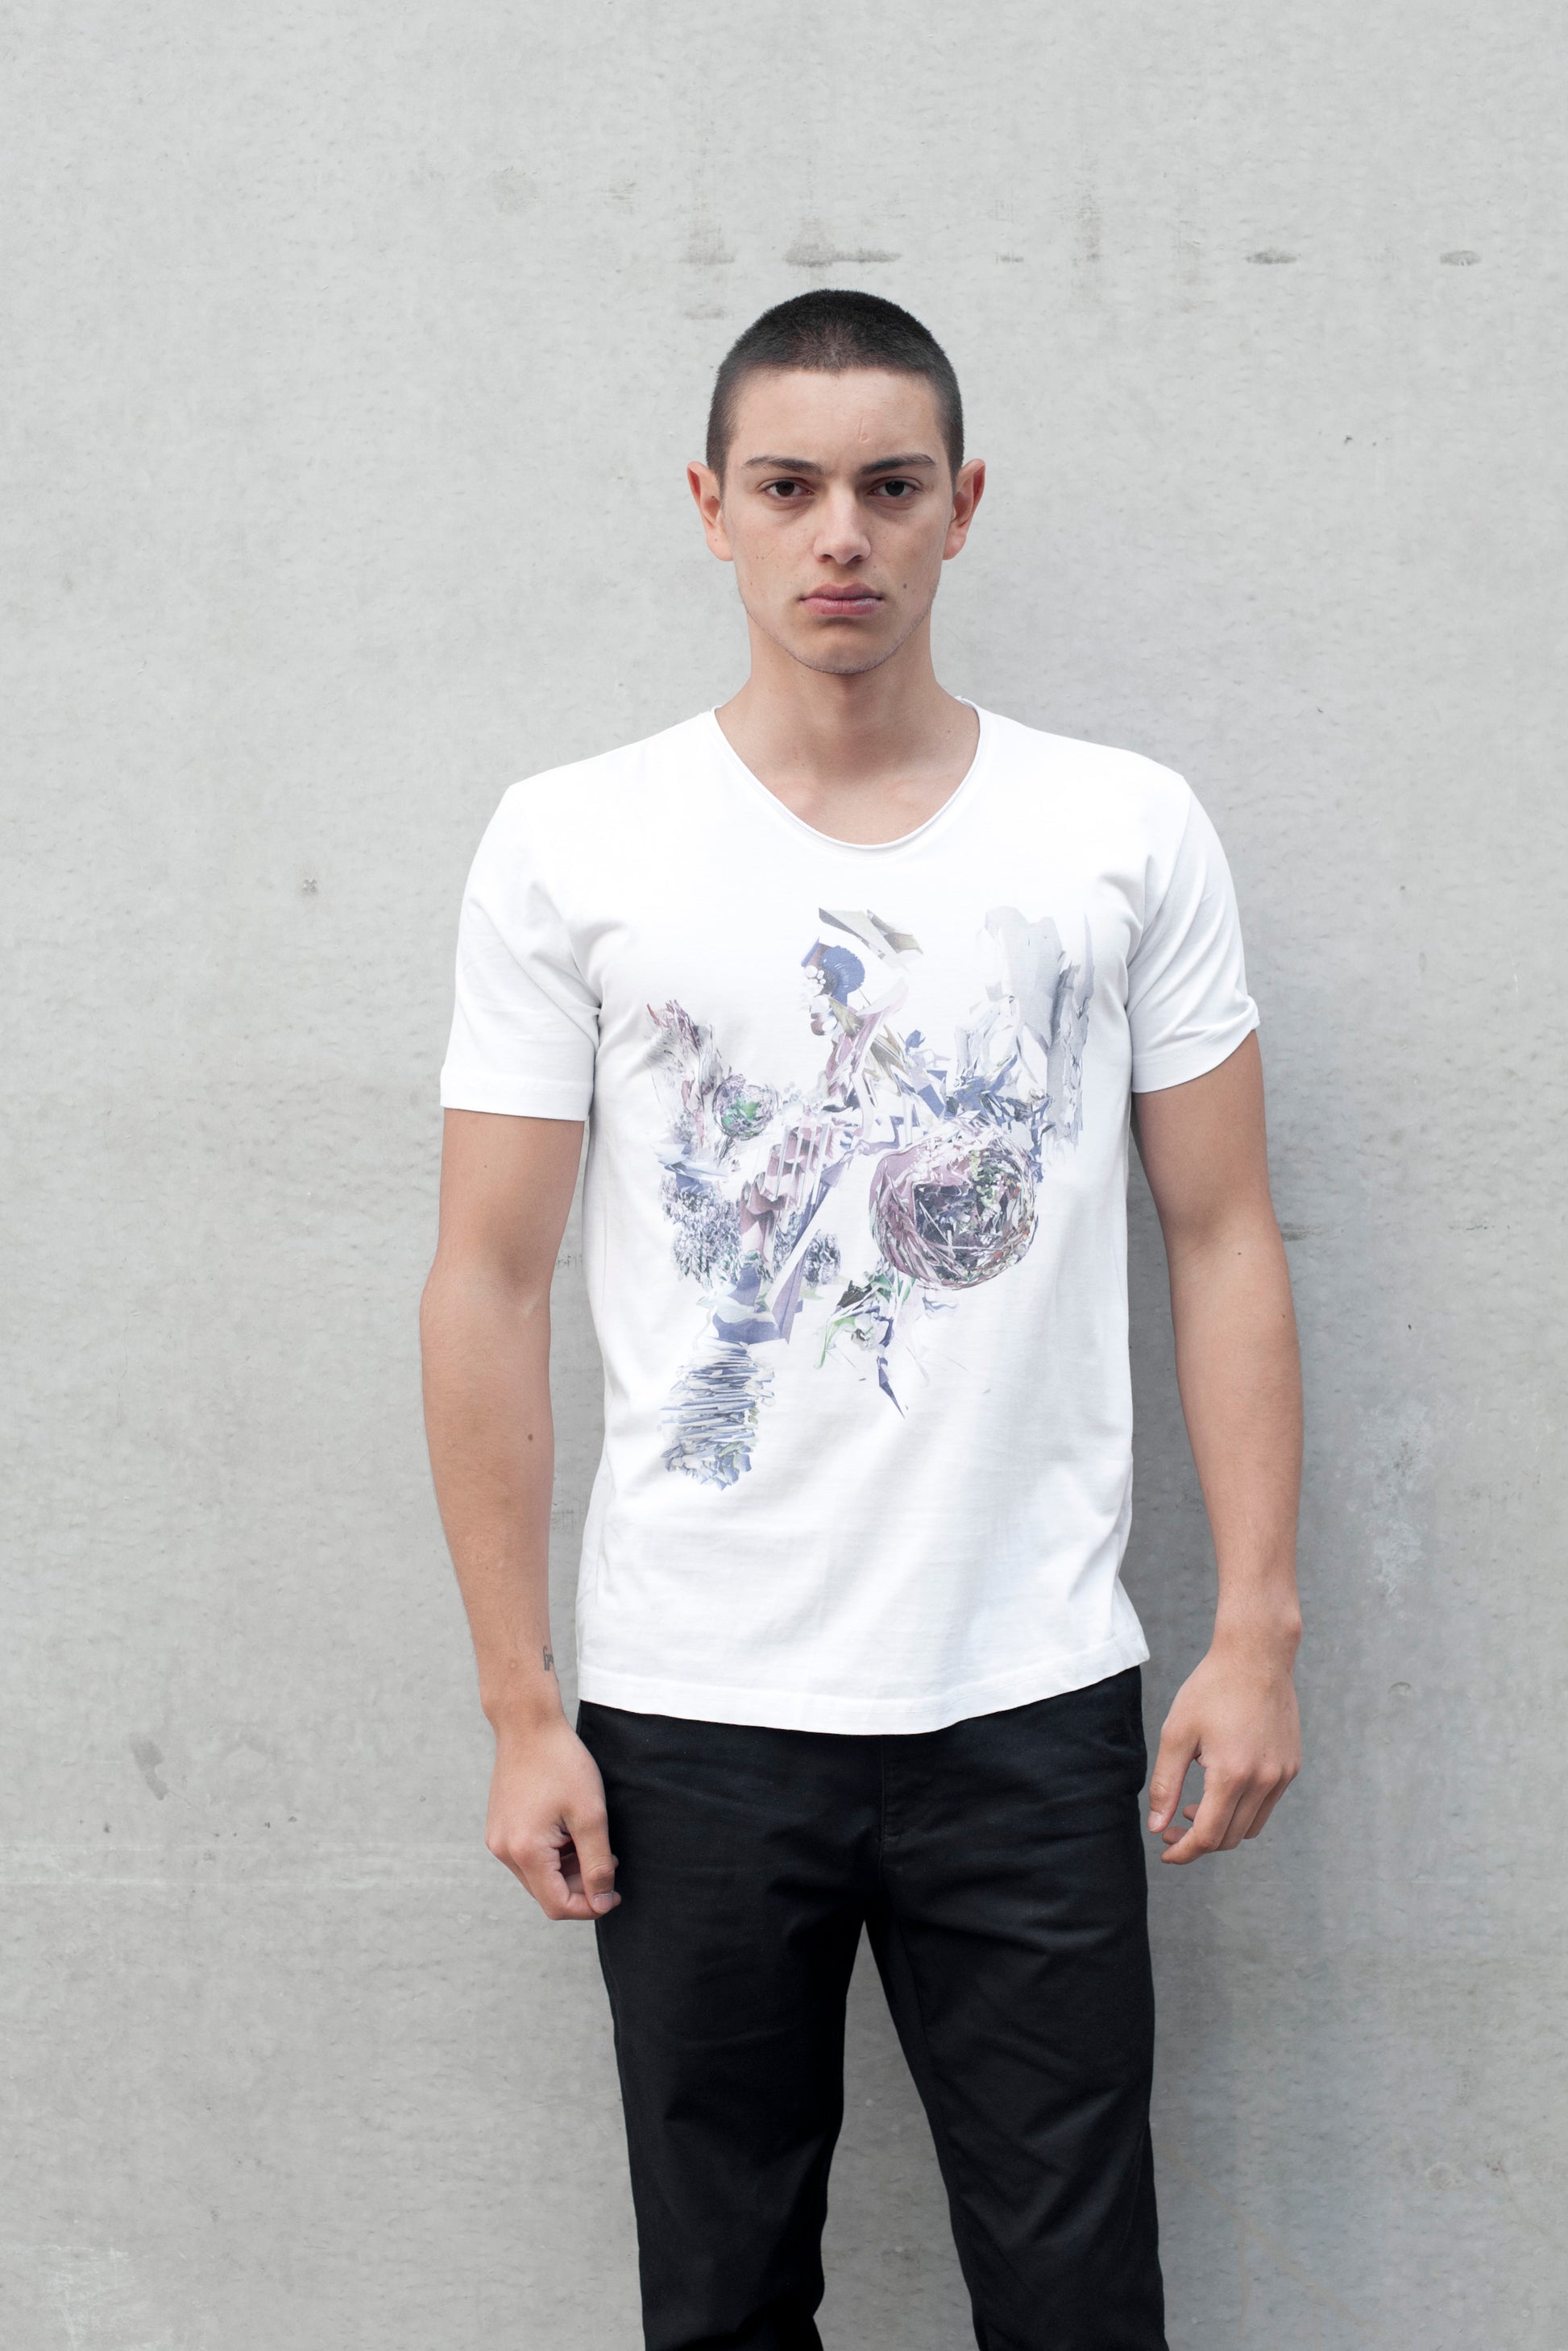 T-Shirt: #1 | Artist: Saad Moosajee - Streetwear - Ingmar Studio